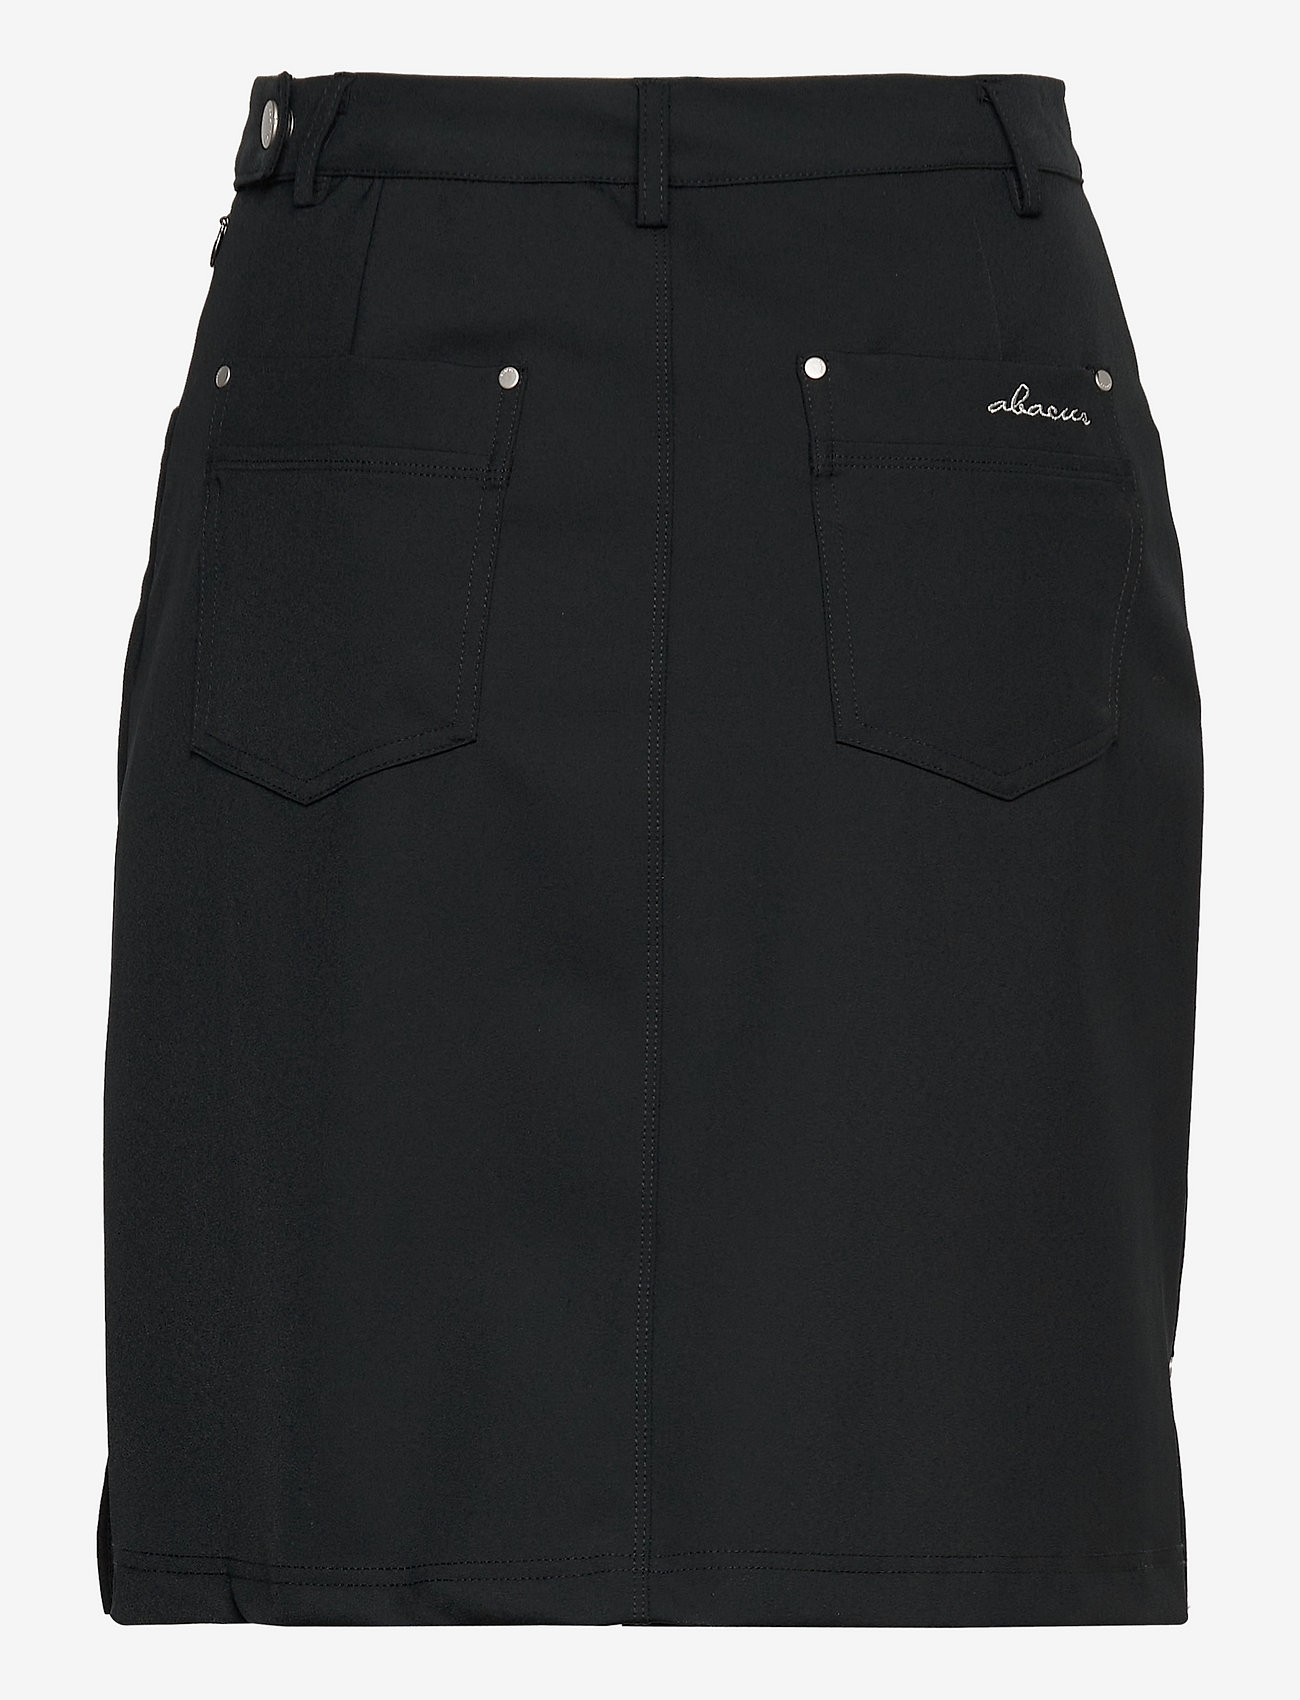 Abacus - Lds Elite skort 50cm - skirts - black - 1